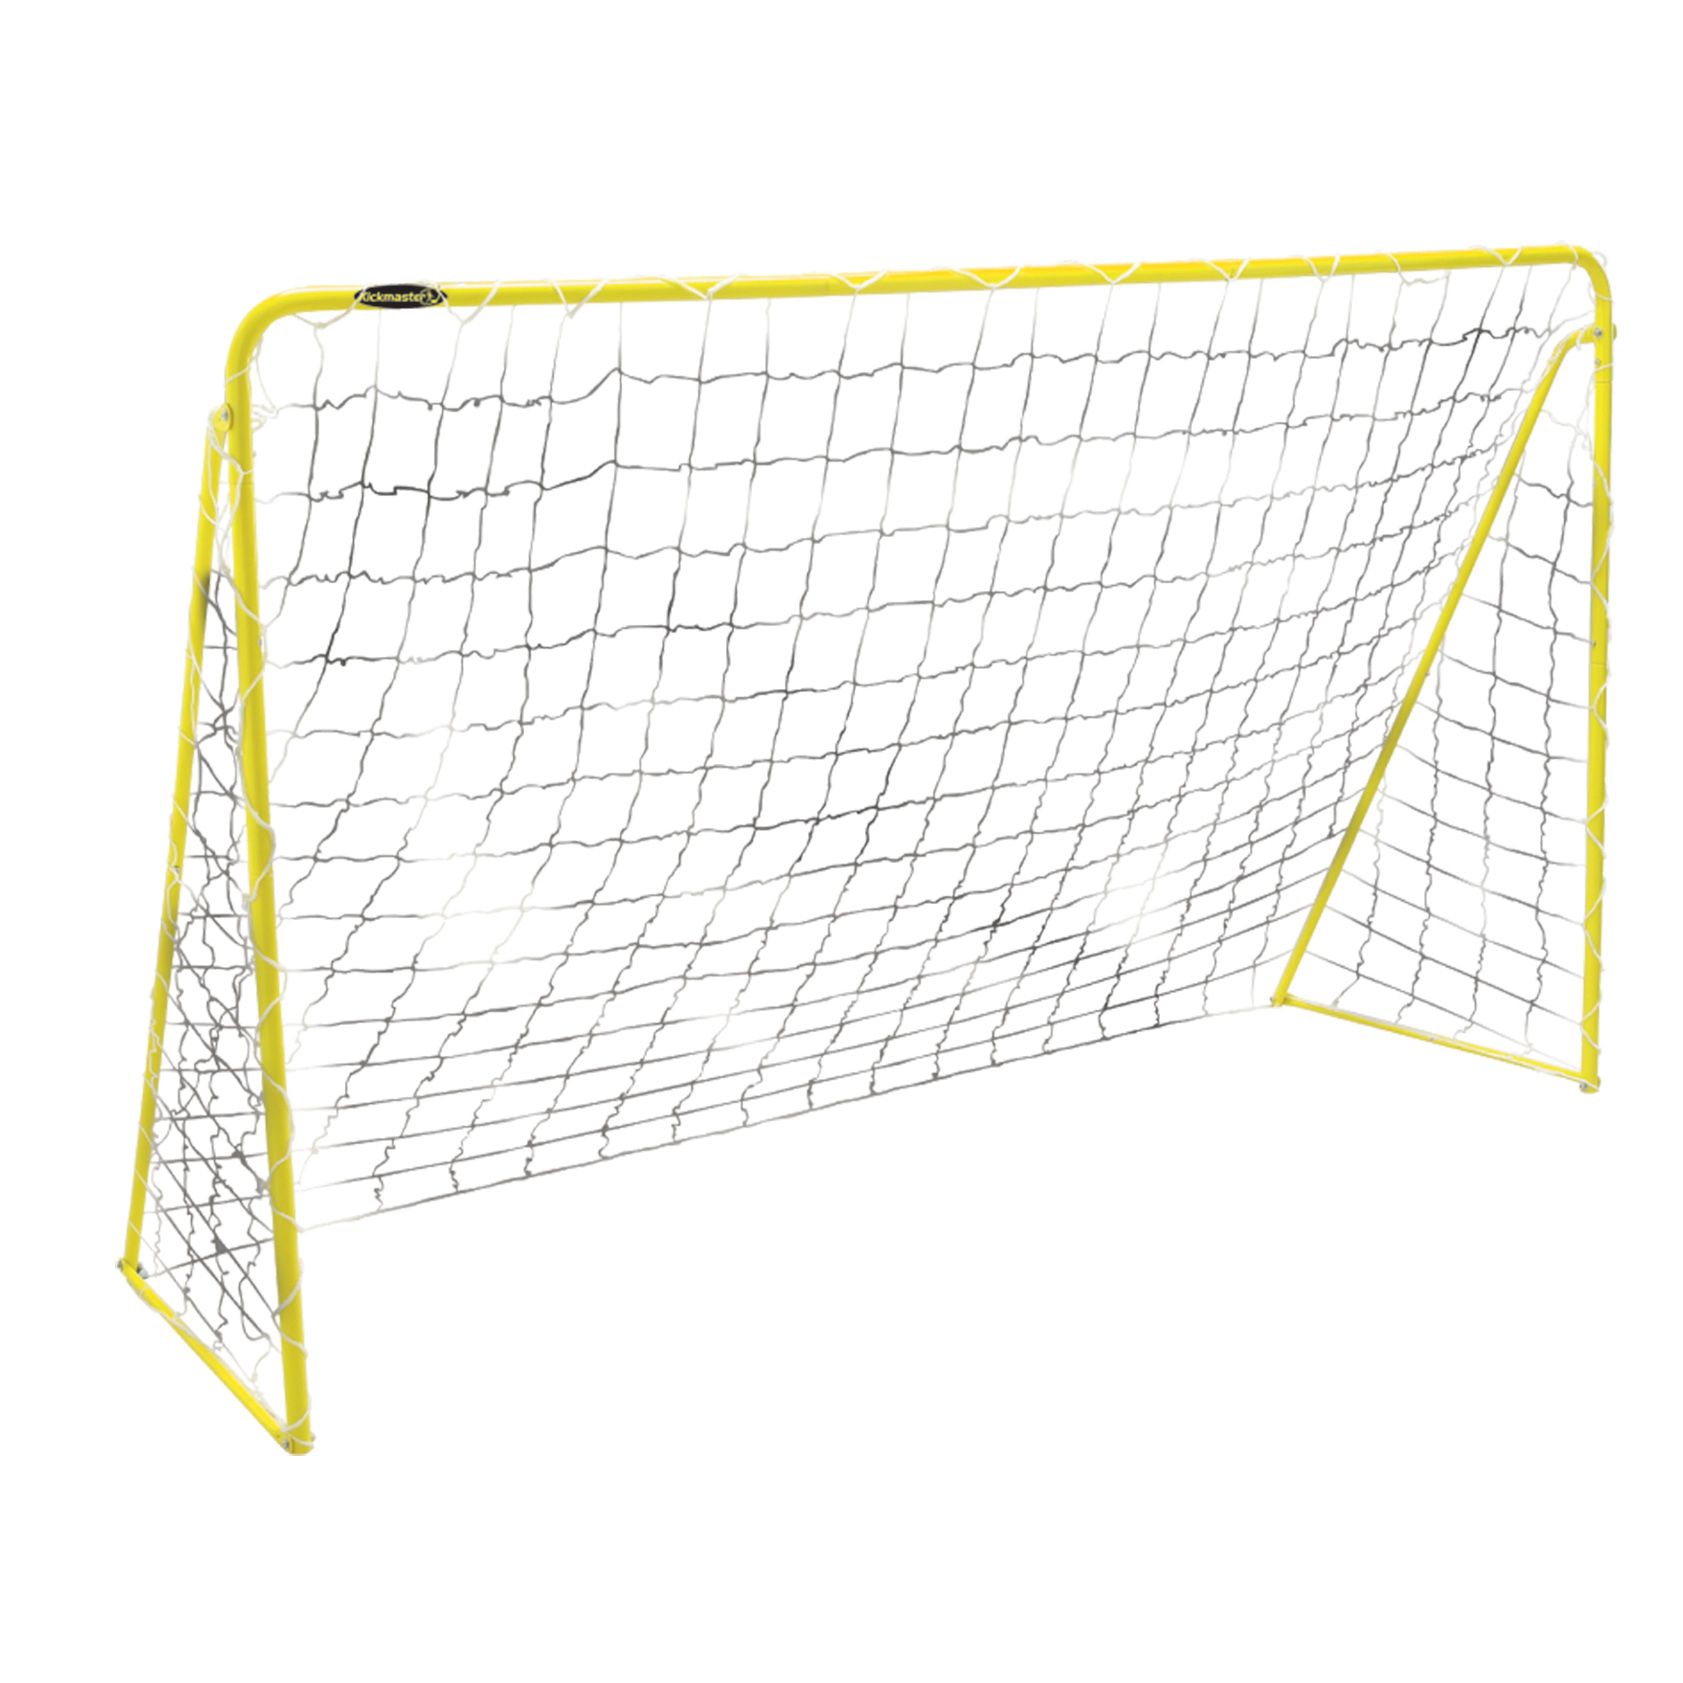 Kickmaster Premier Black/Yellow Garden Goal